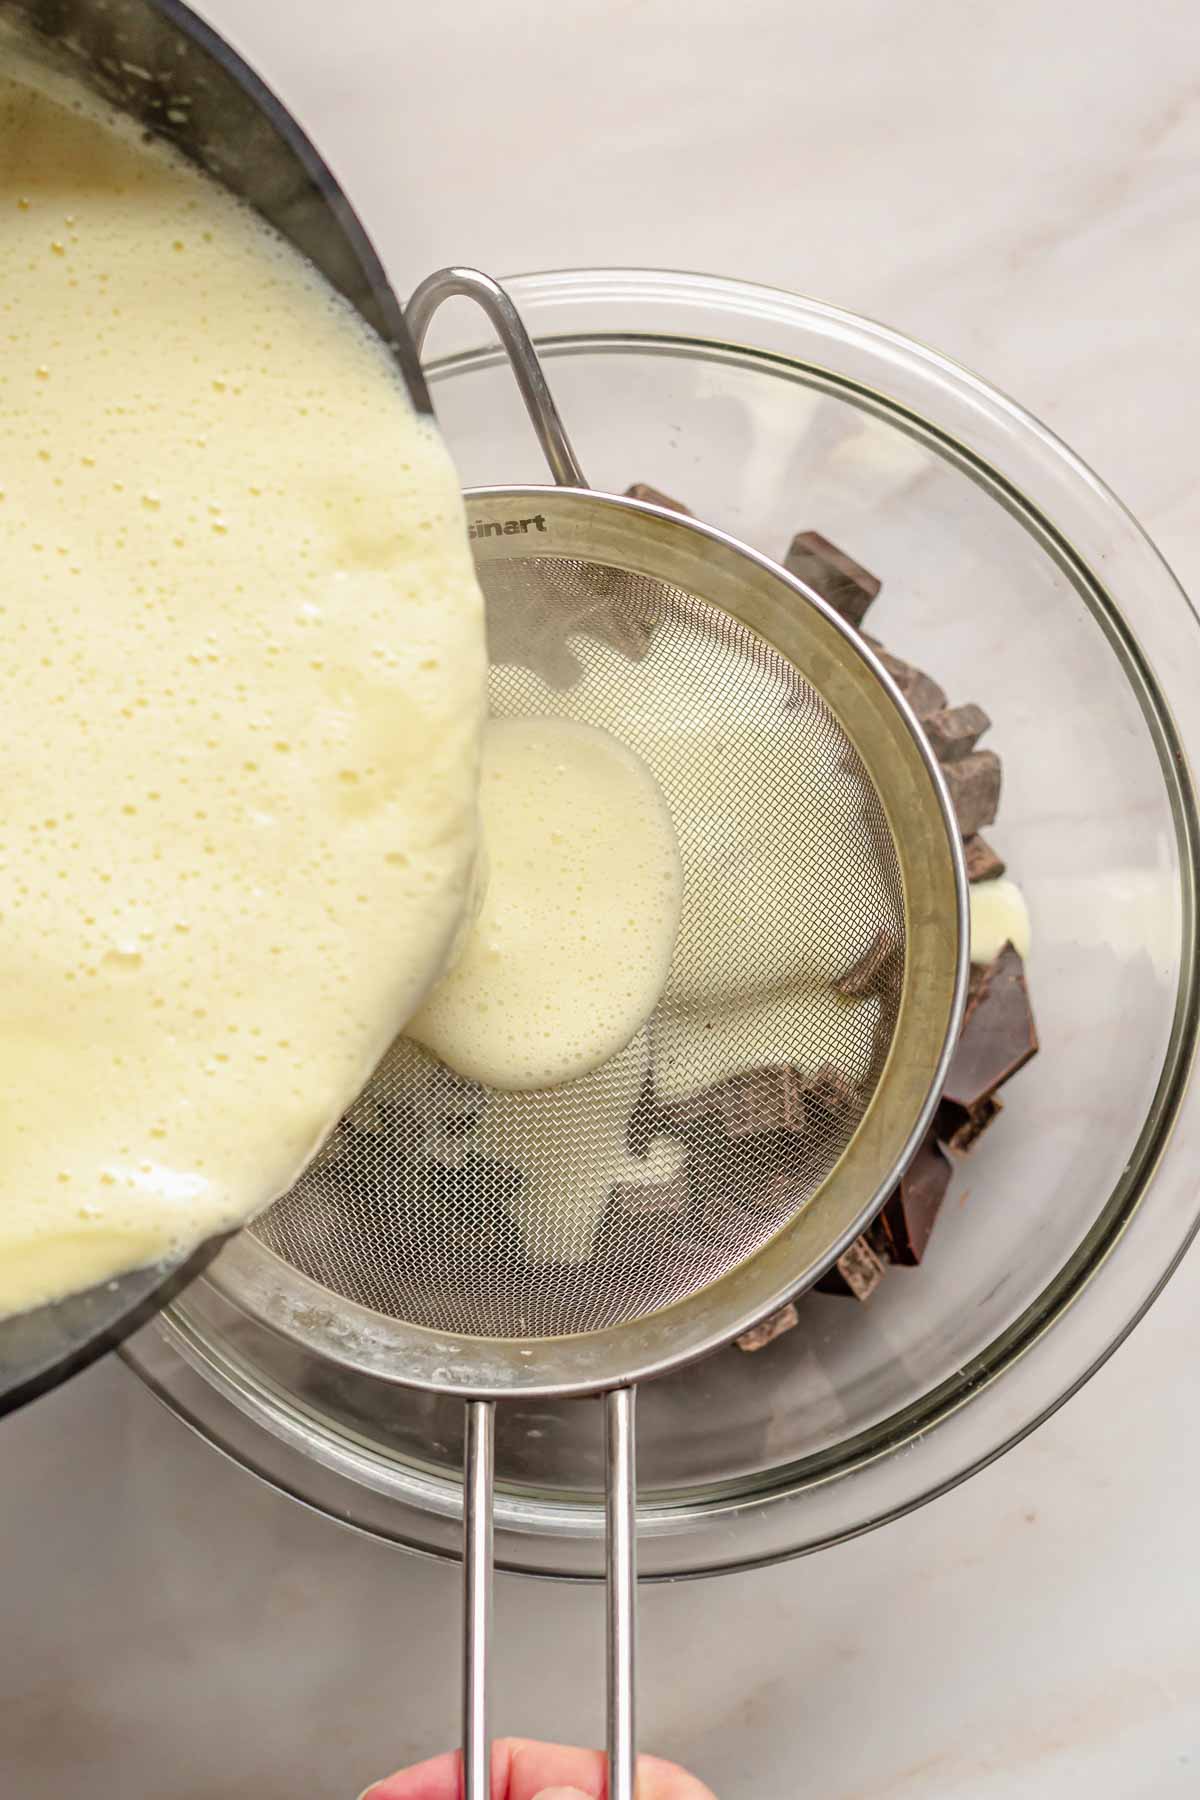 Custard cream pouring through a sieve into a bowl of chocolate.